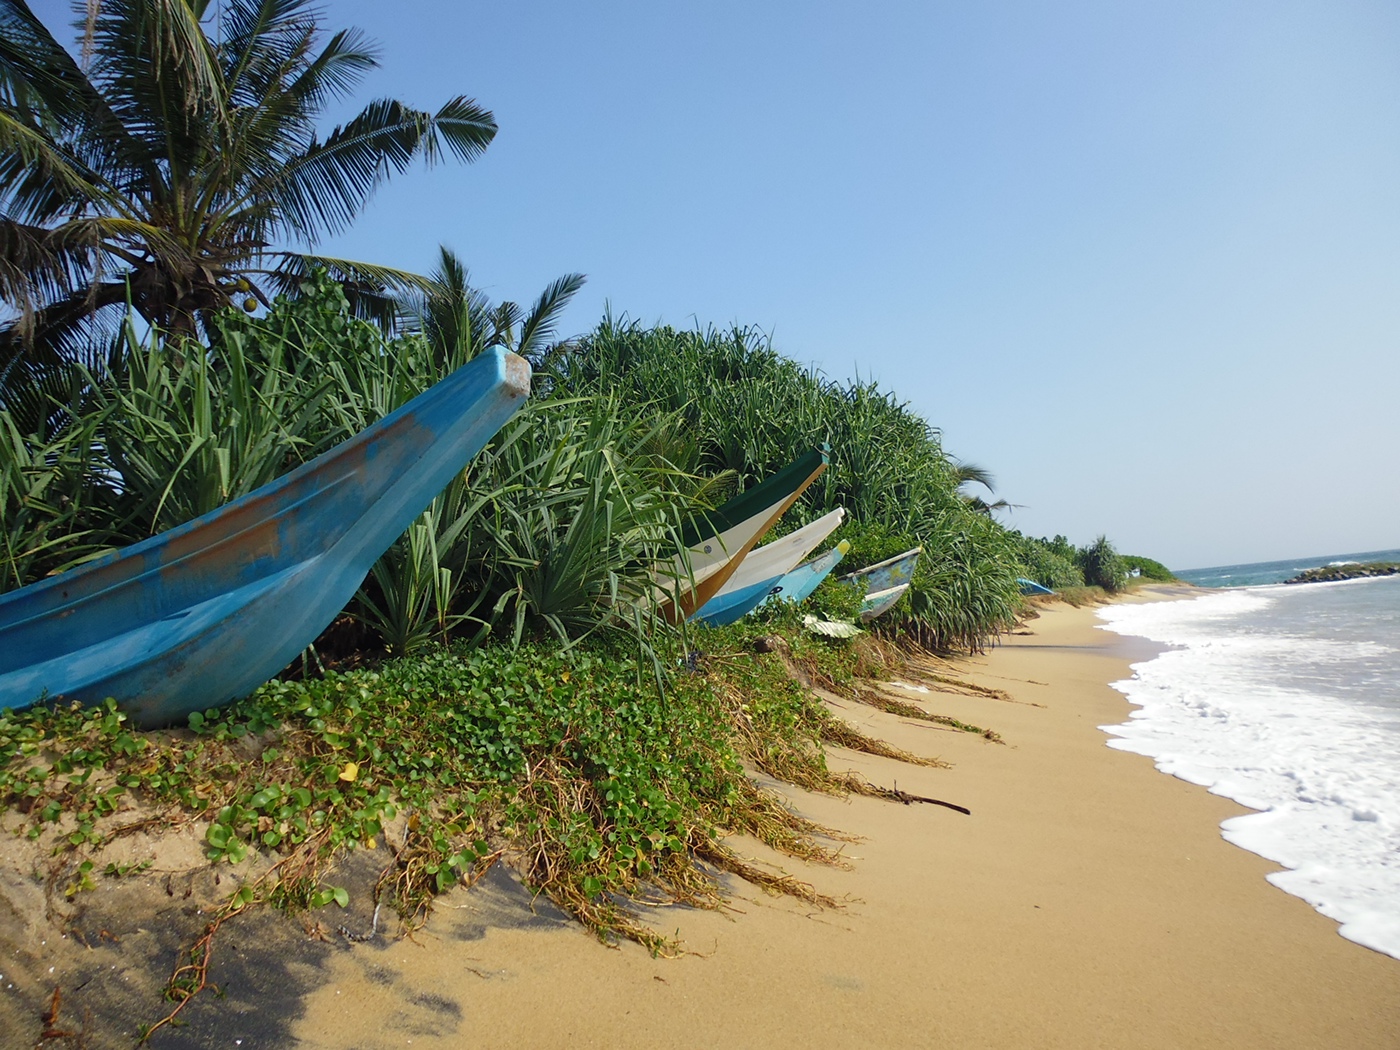 Sri lanka Travel Boats Ocean journey beach relax summer Nature tropics